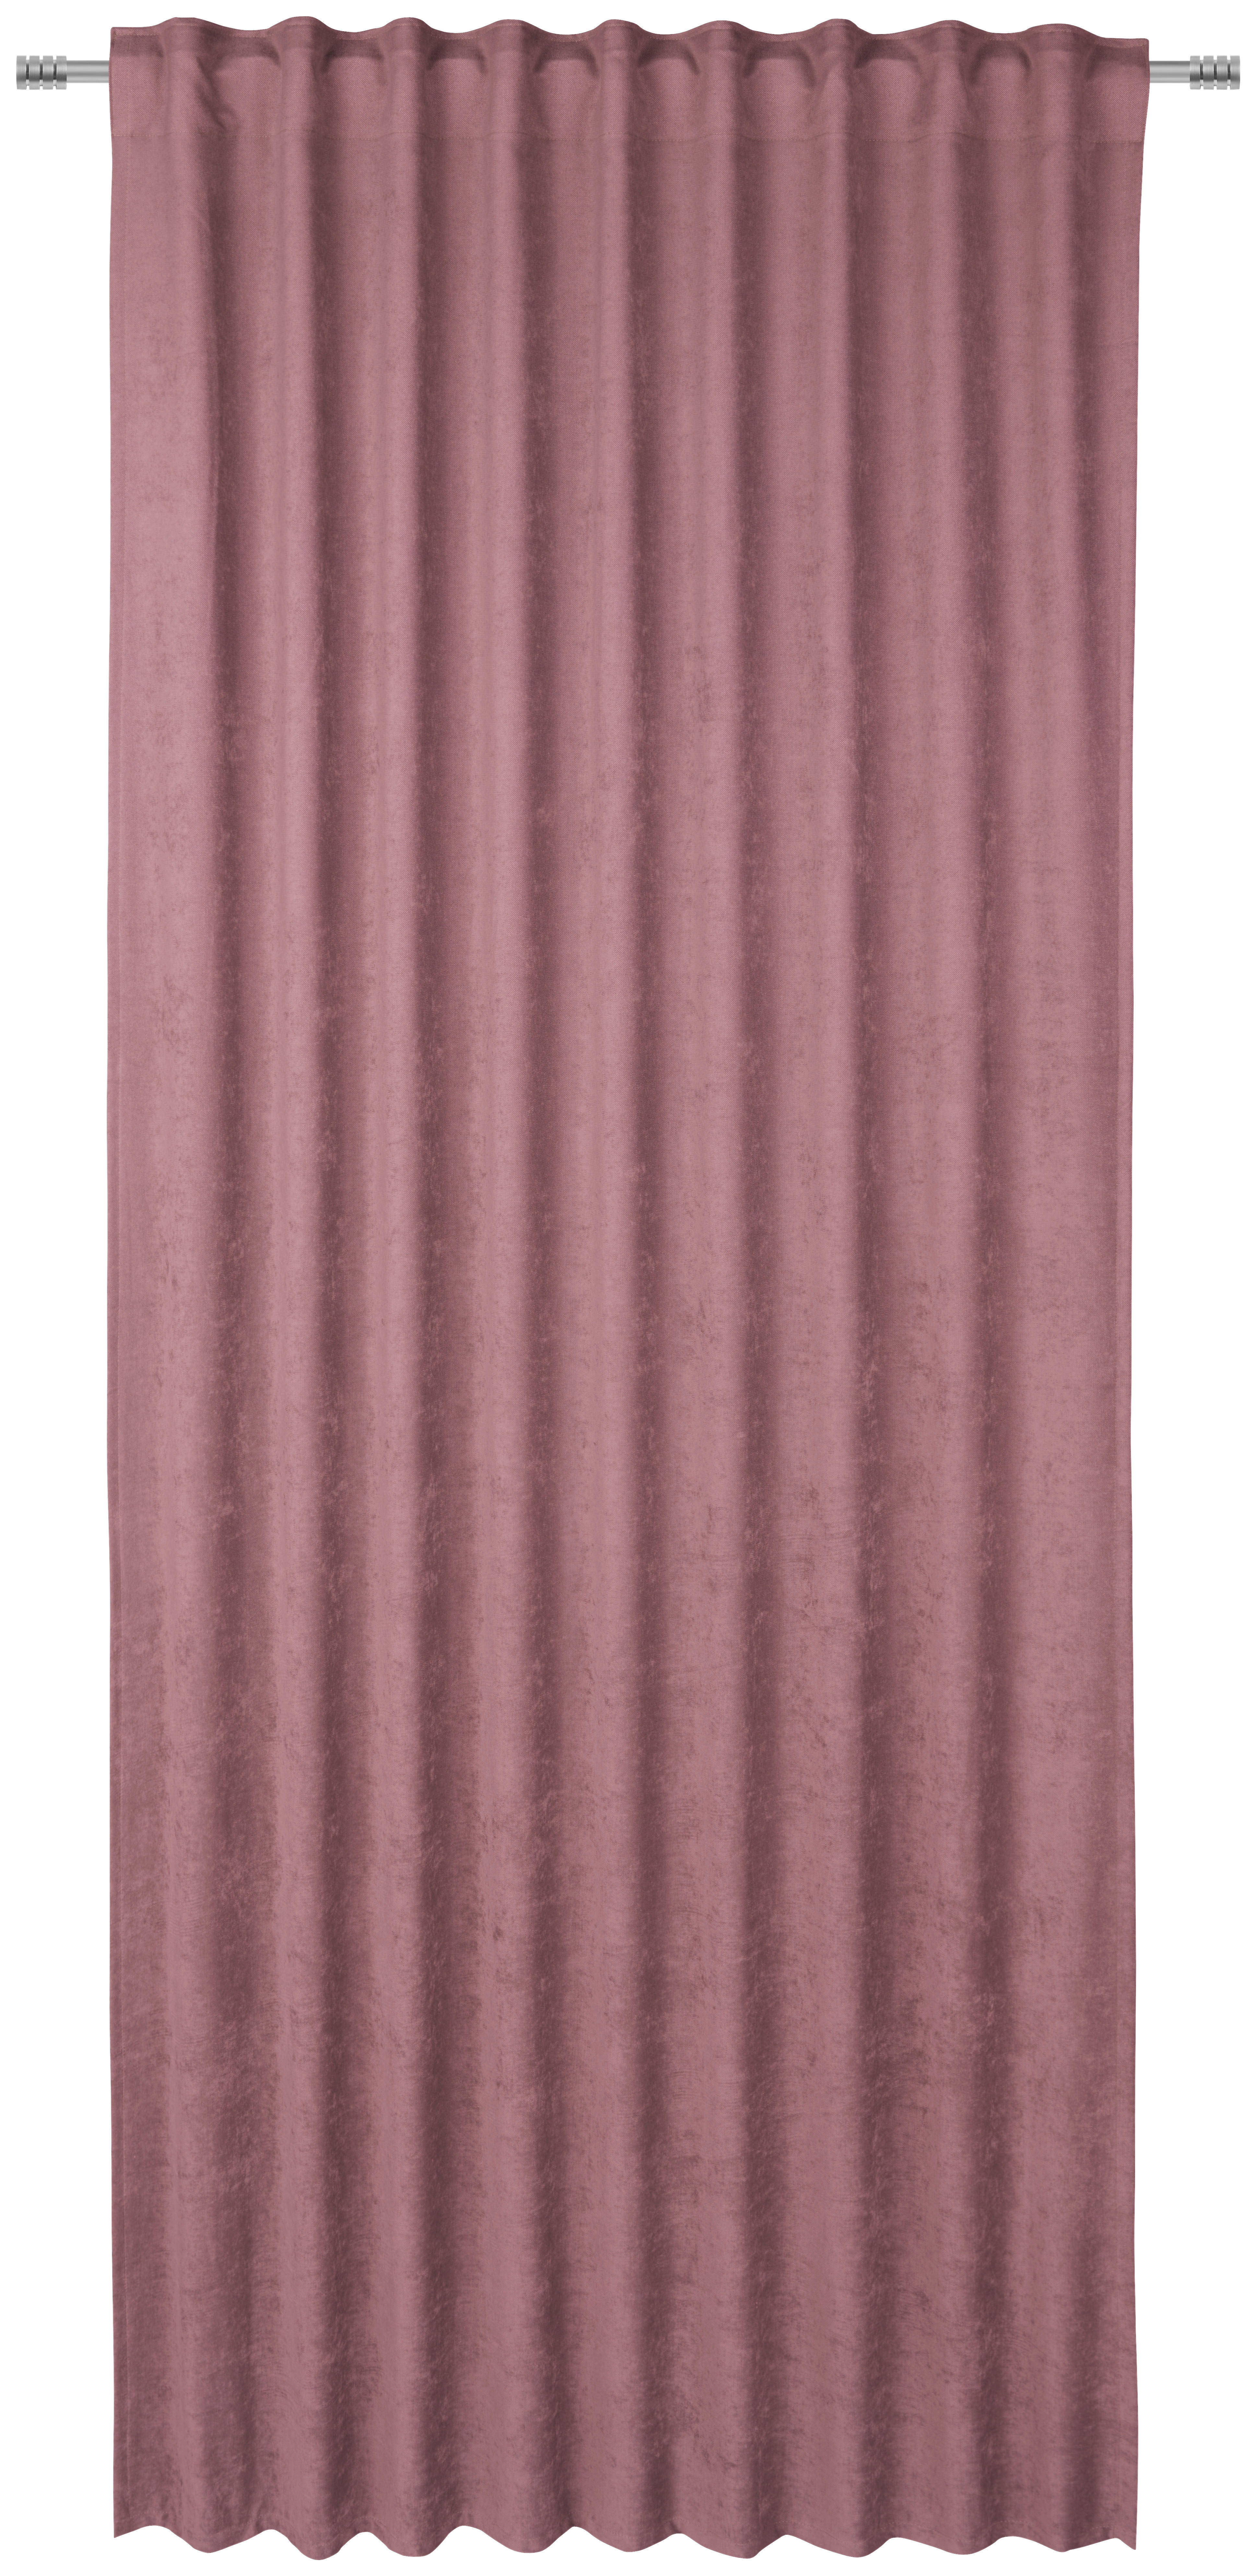 FERTIGVORHANG PROMO blickdicht 140/245 cm   - Pink, KONVENTIONELL, Textil (140/245cm) - Esposa